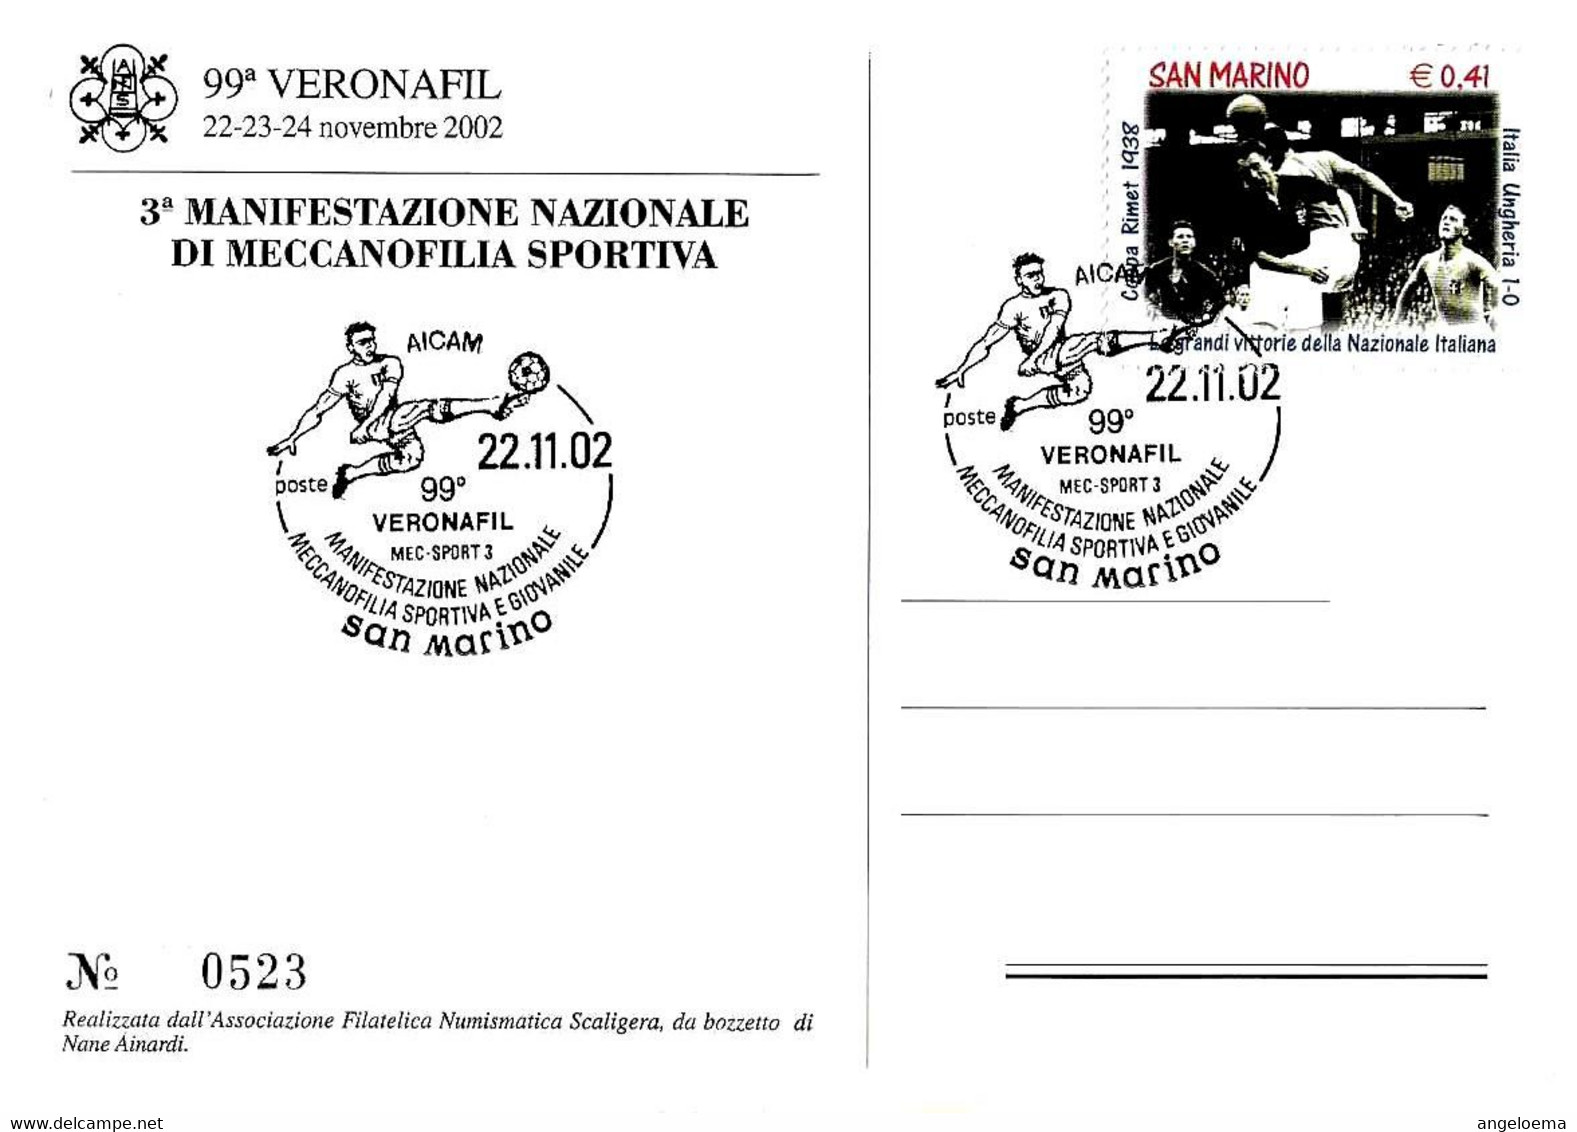 SAN MARINO - 2002 99^ Veronafil 3^ Manifestazione Naz. Meccanofilia Sportiva (calciatore) Su Cartolina Ufficiale -7873 - Briefe U. Dokumente